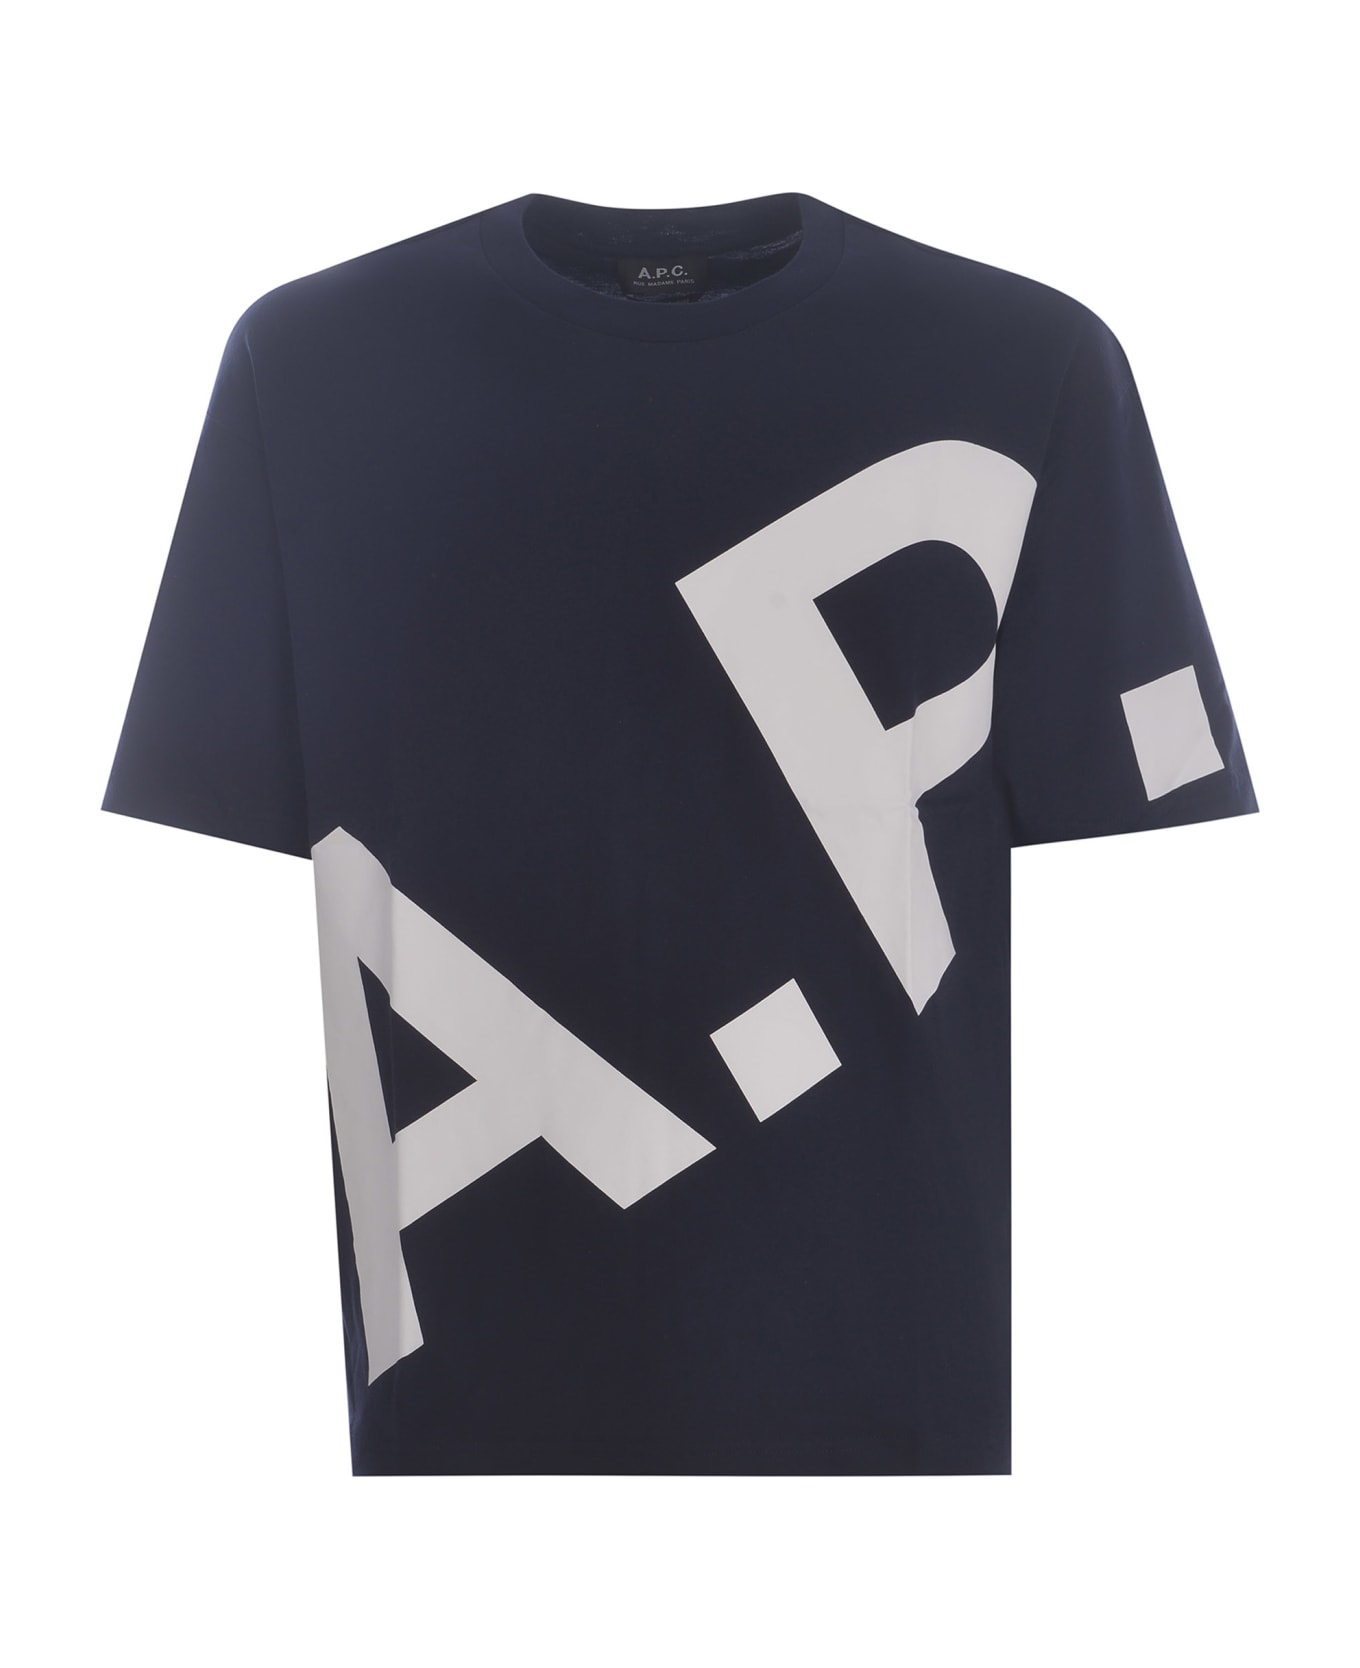 A.P.C. Lisandre T-shirt - DARK NAVY Tシャツ